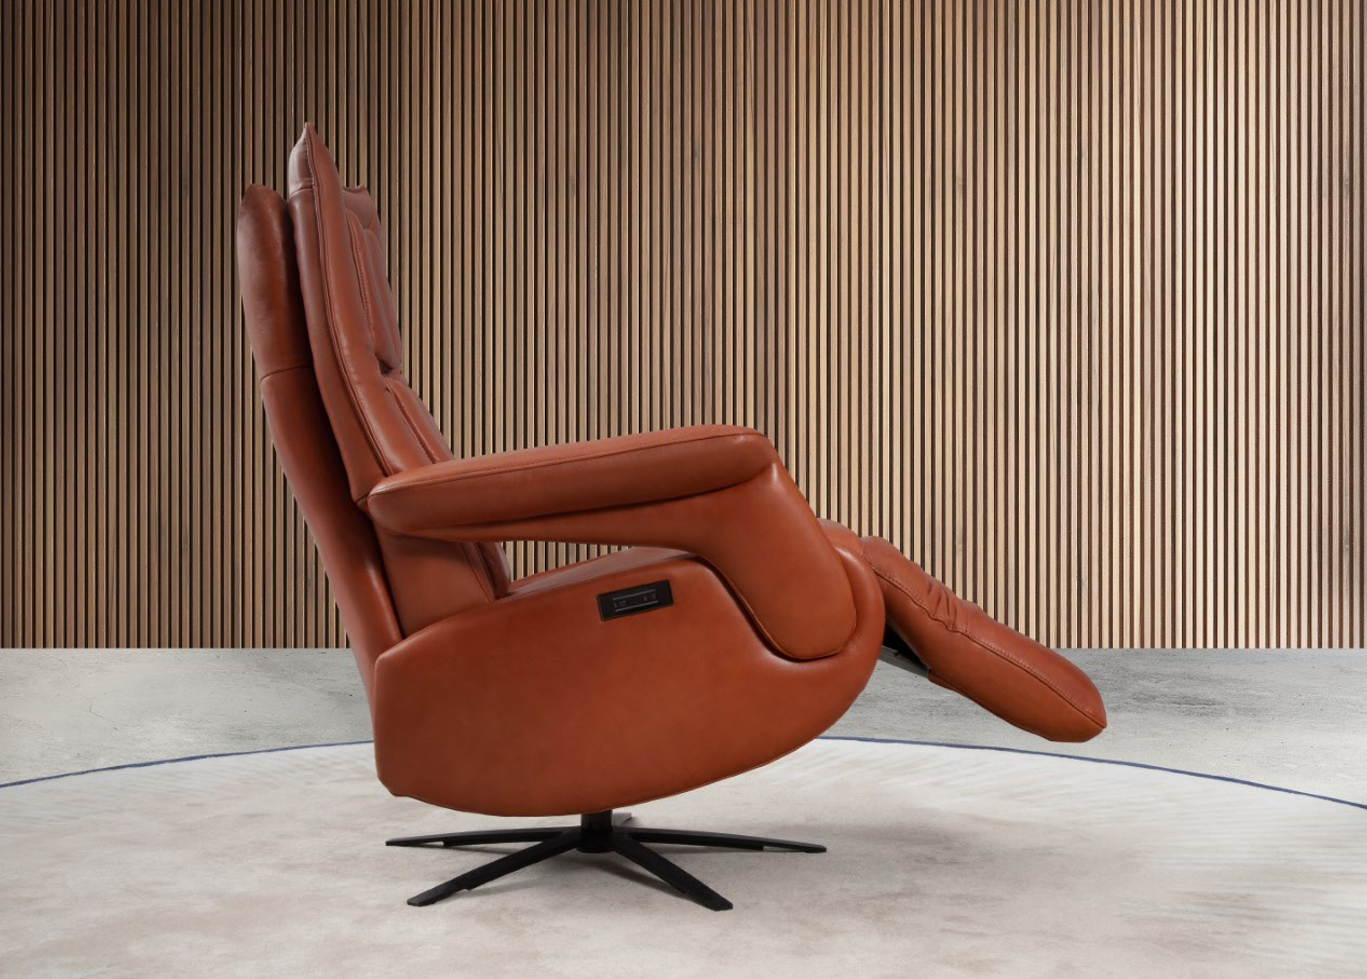 DM-B6005 - TV Recliner Chair (Cognac-Brown Full Leather) - 47458